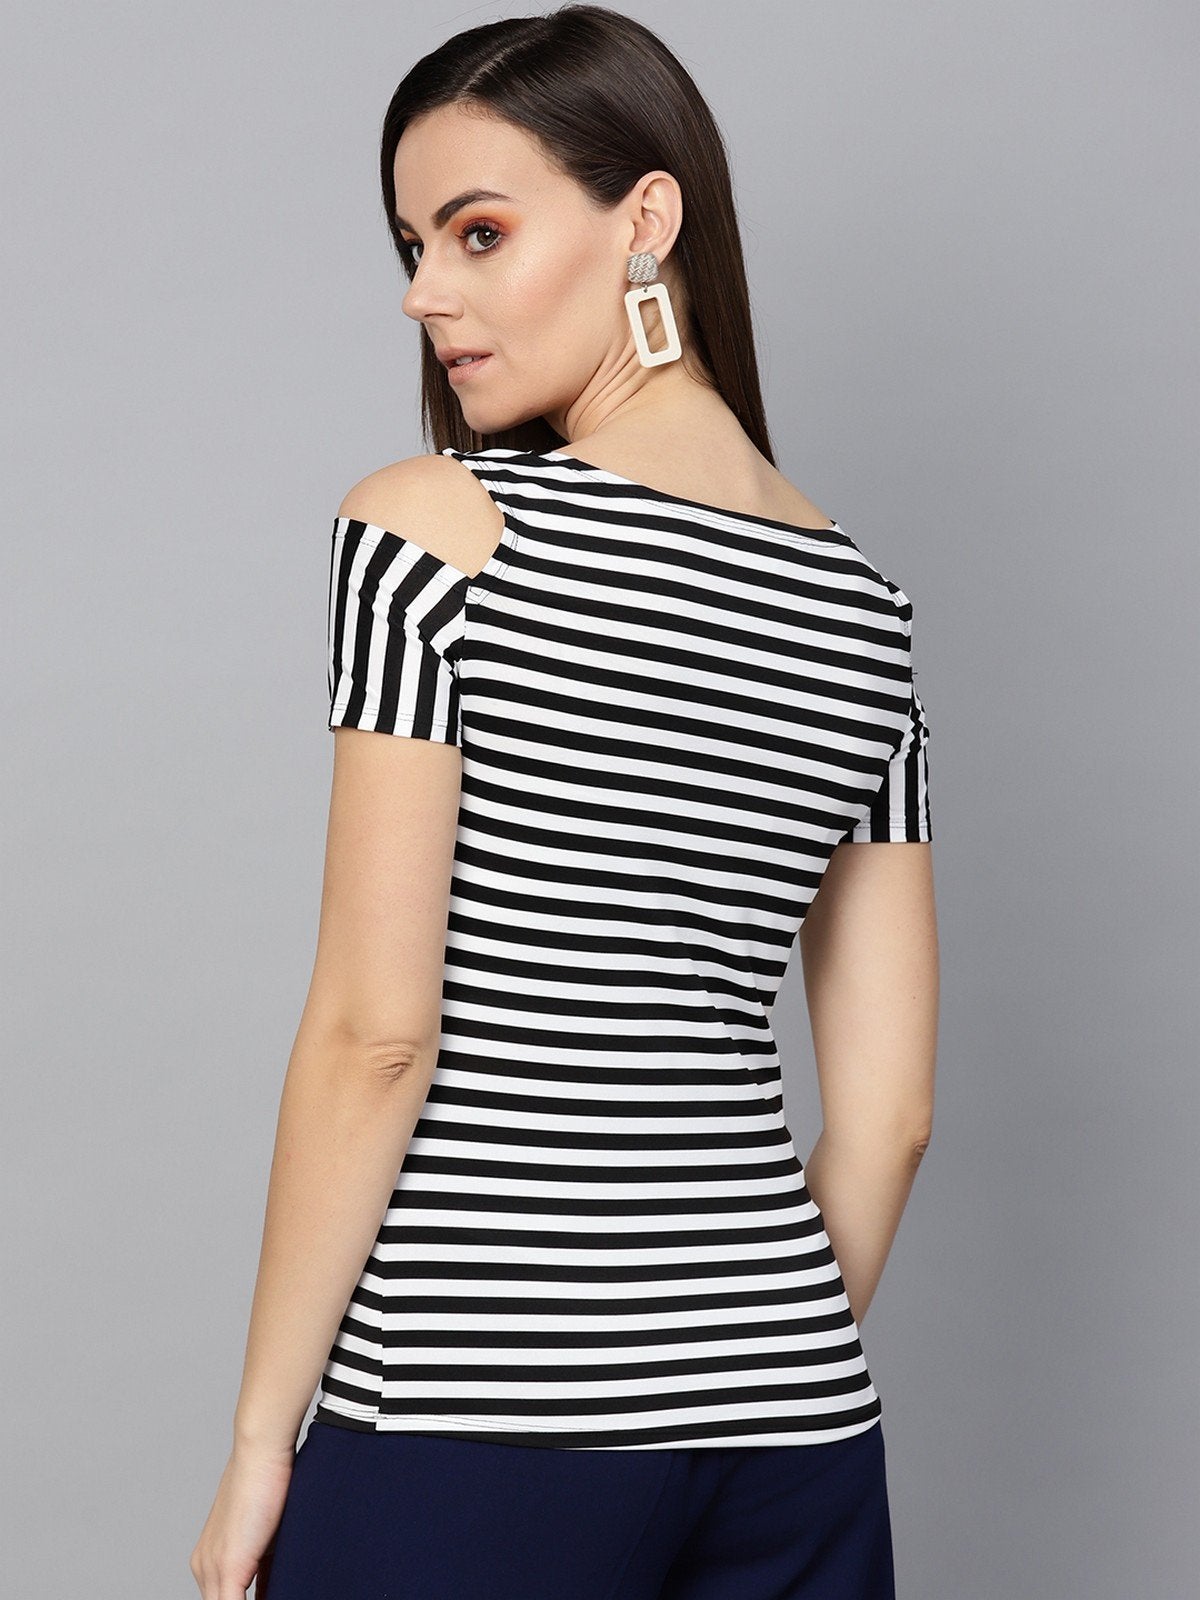 Women's Thin Stripe Shoulder Cut Top - Pannkh